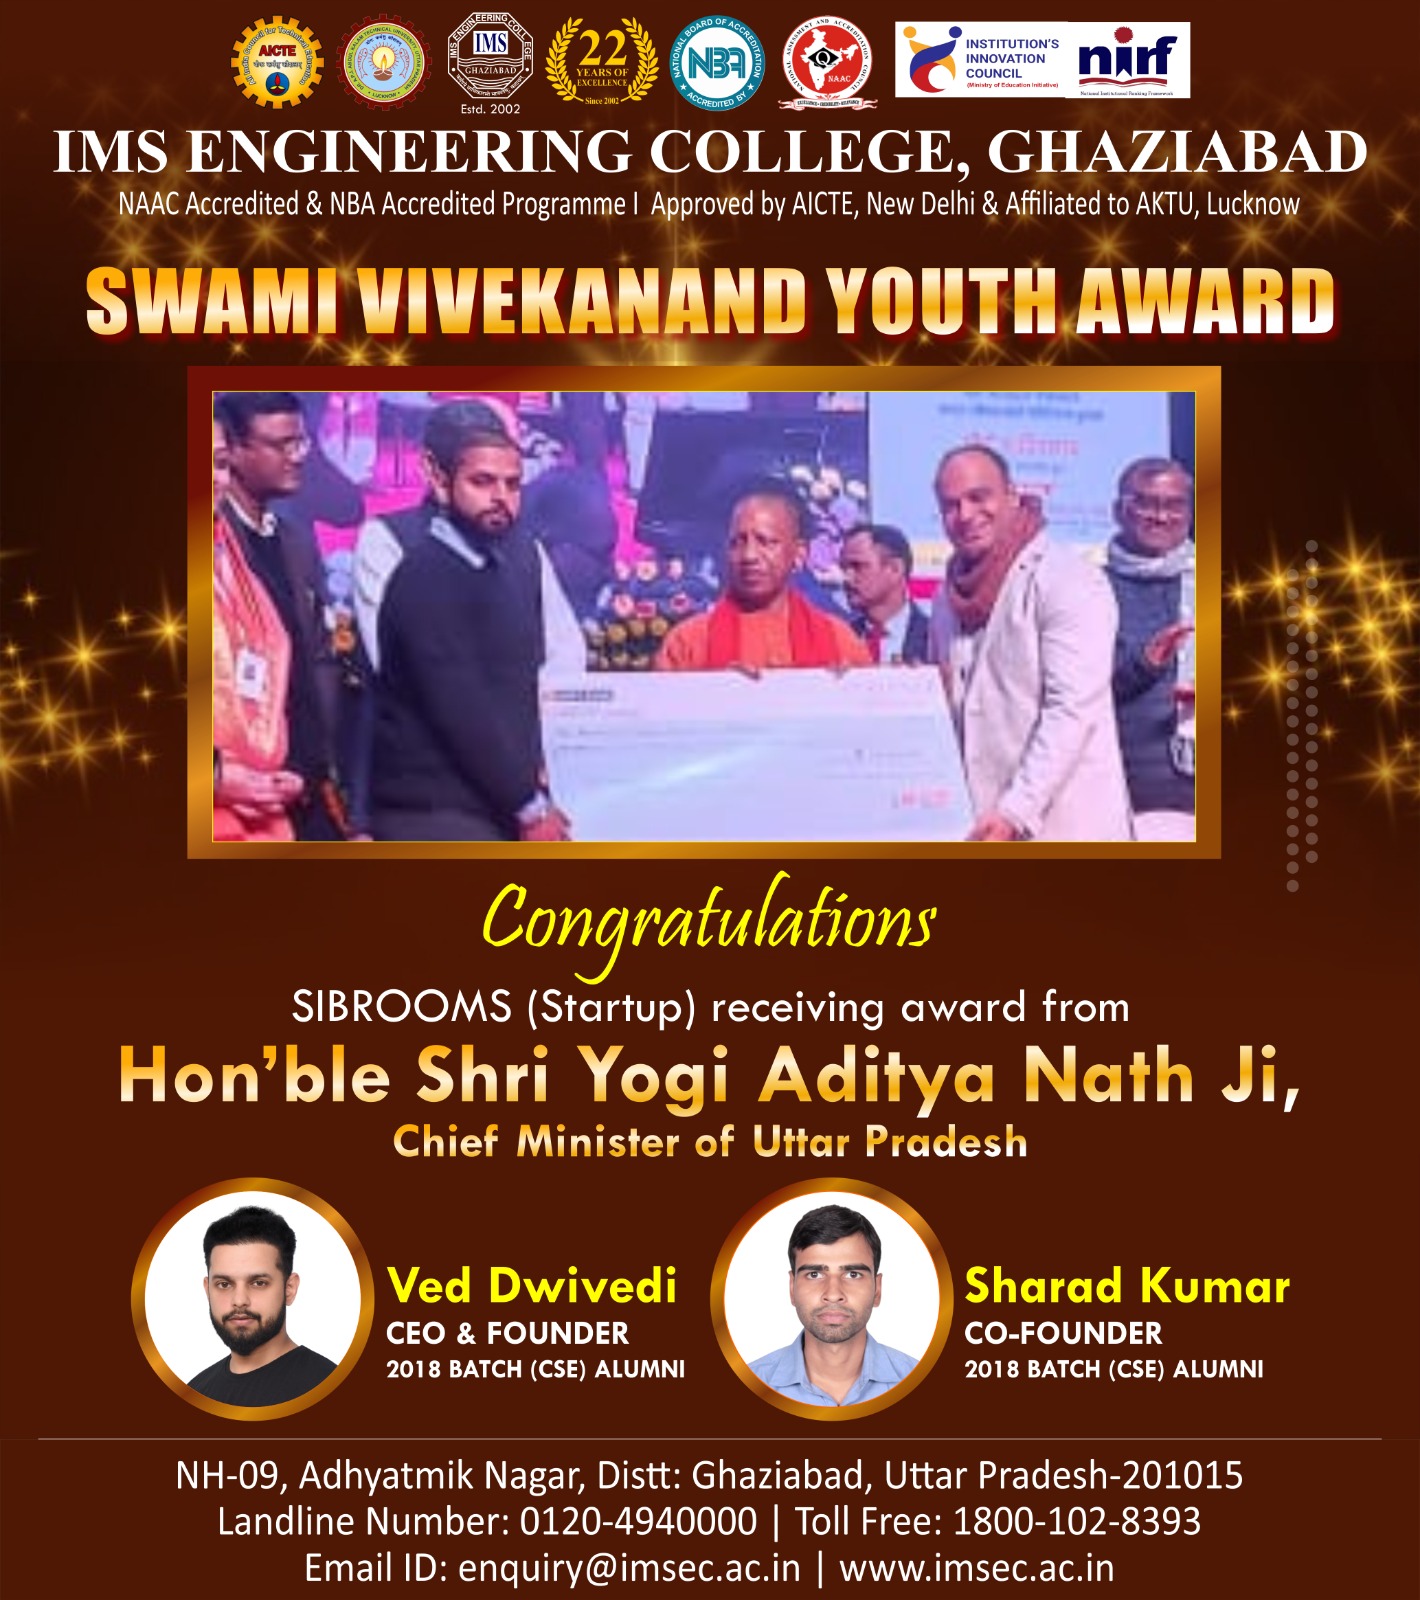 Alumni of IMSEC received Prestigious Swami Vivekanand Youth Award for their startup SibRooms